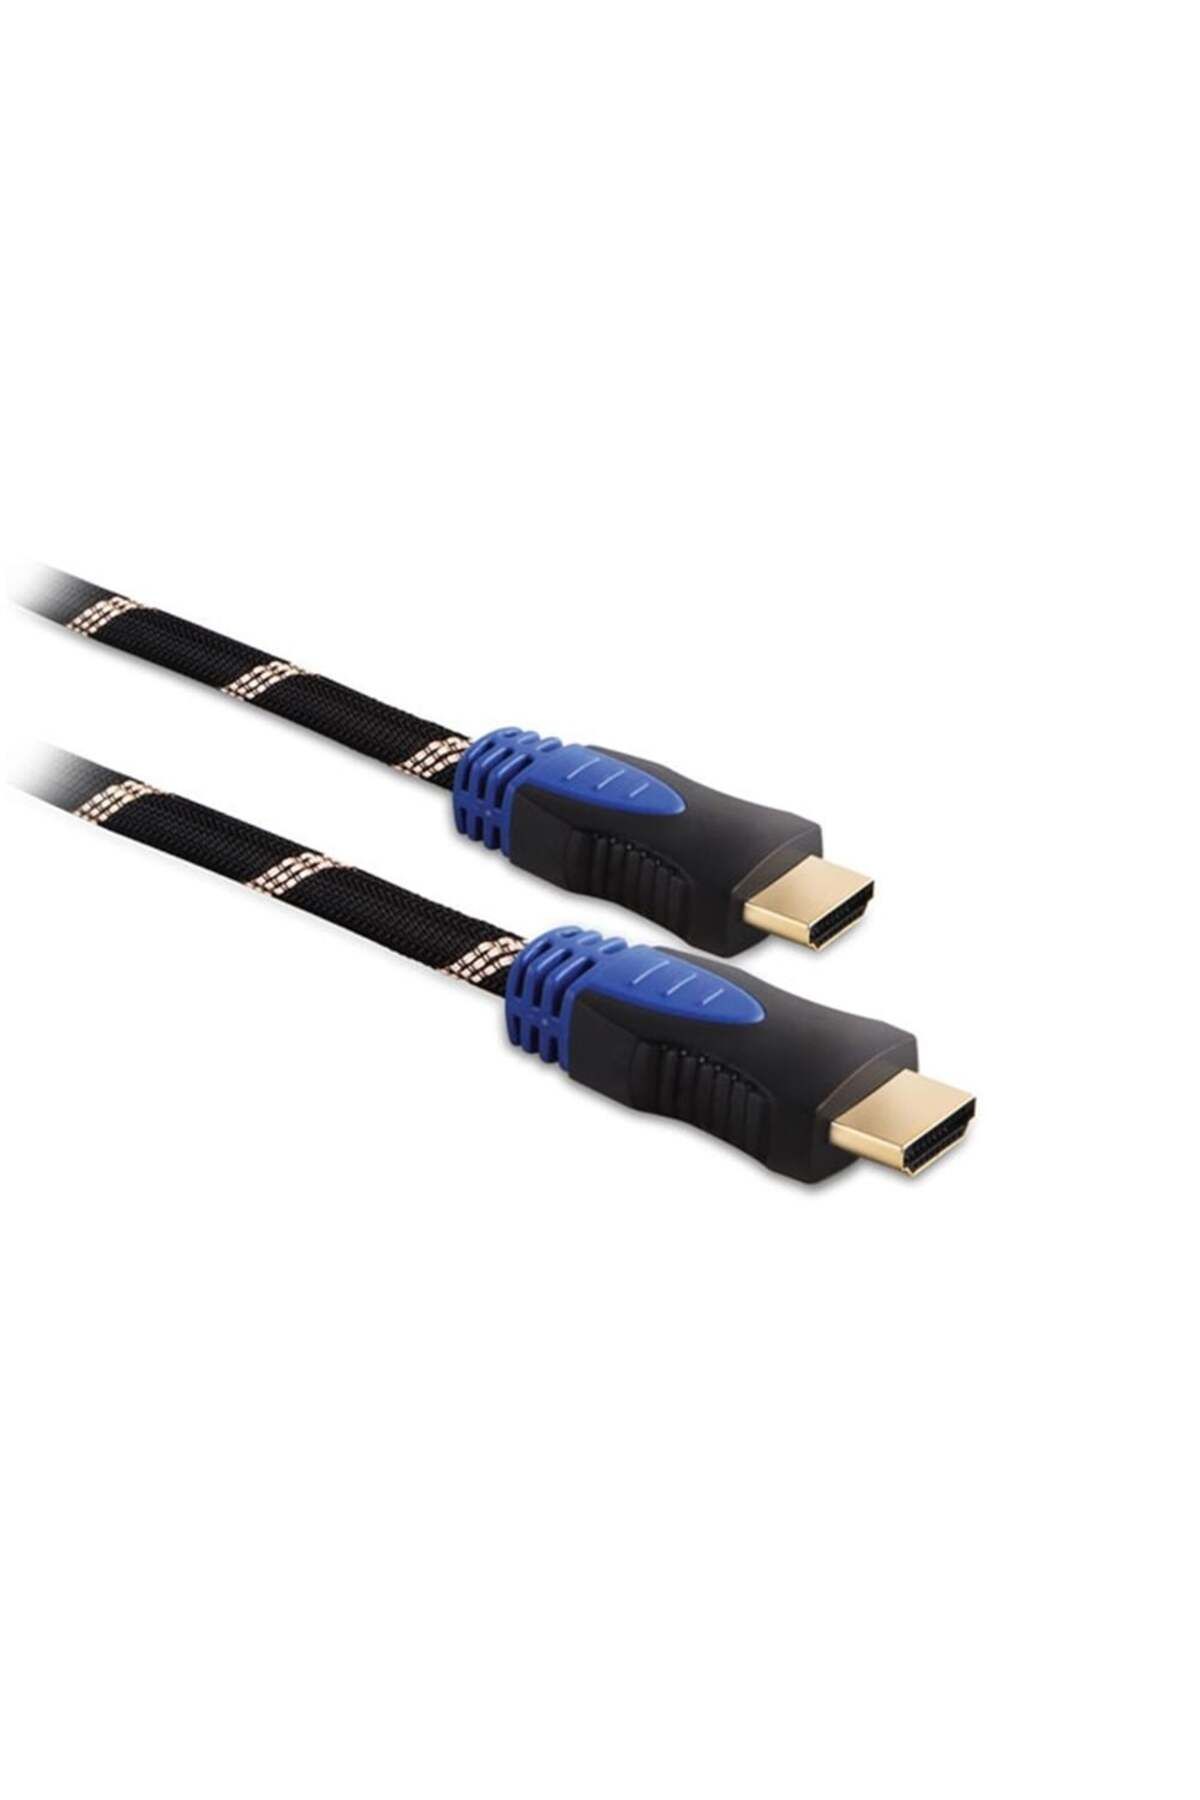 S-Link SLX-303 HDMI ERKEK DEN HDMI ERKEK KORUMALI KILIF 1.4 VER. 3D KABLO 5M- (GOLD)